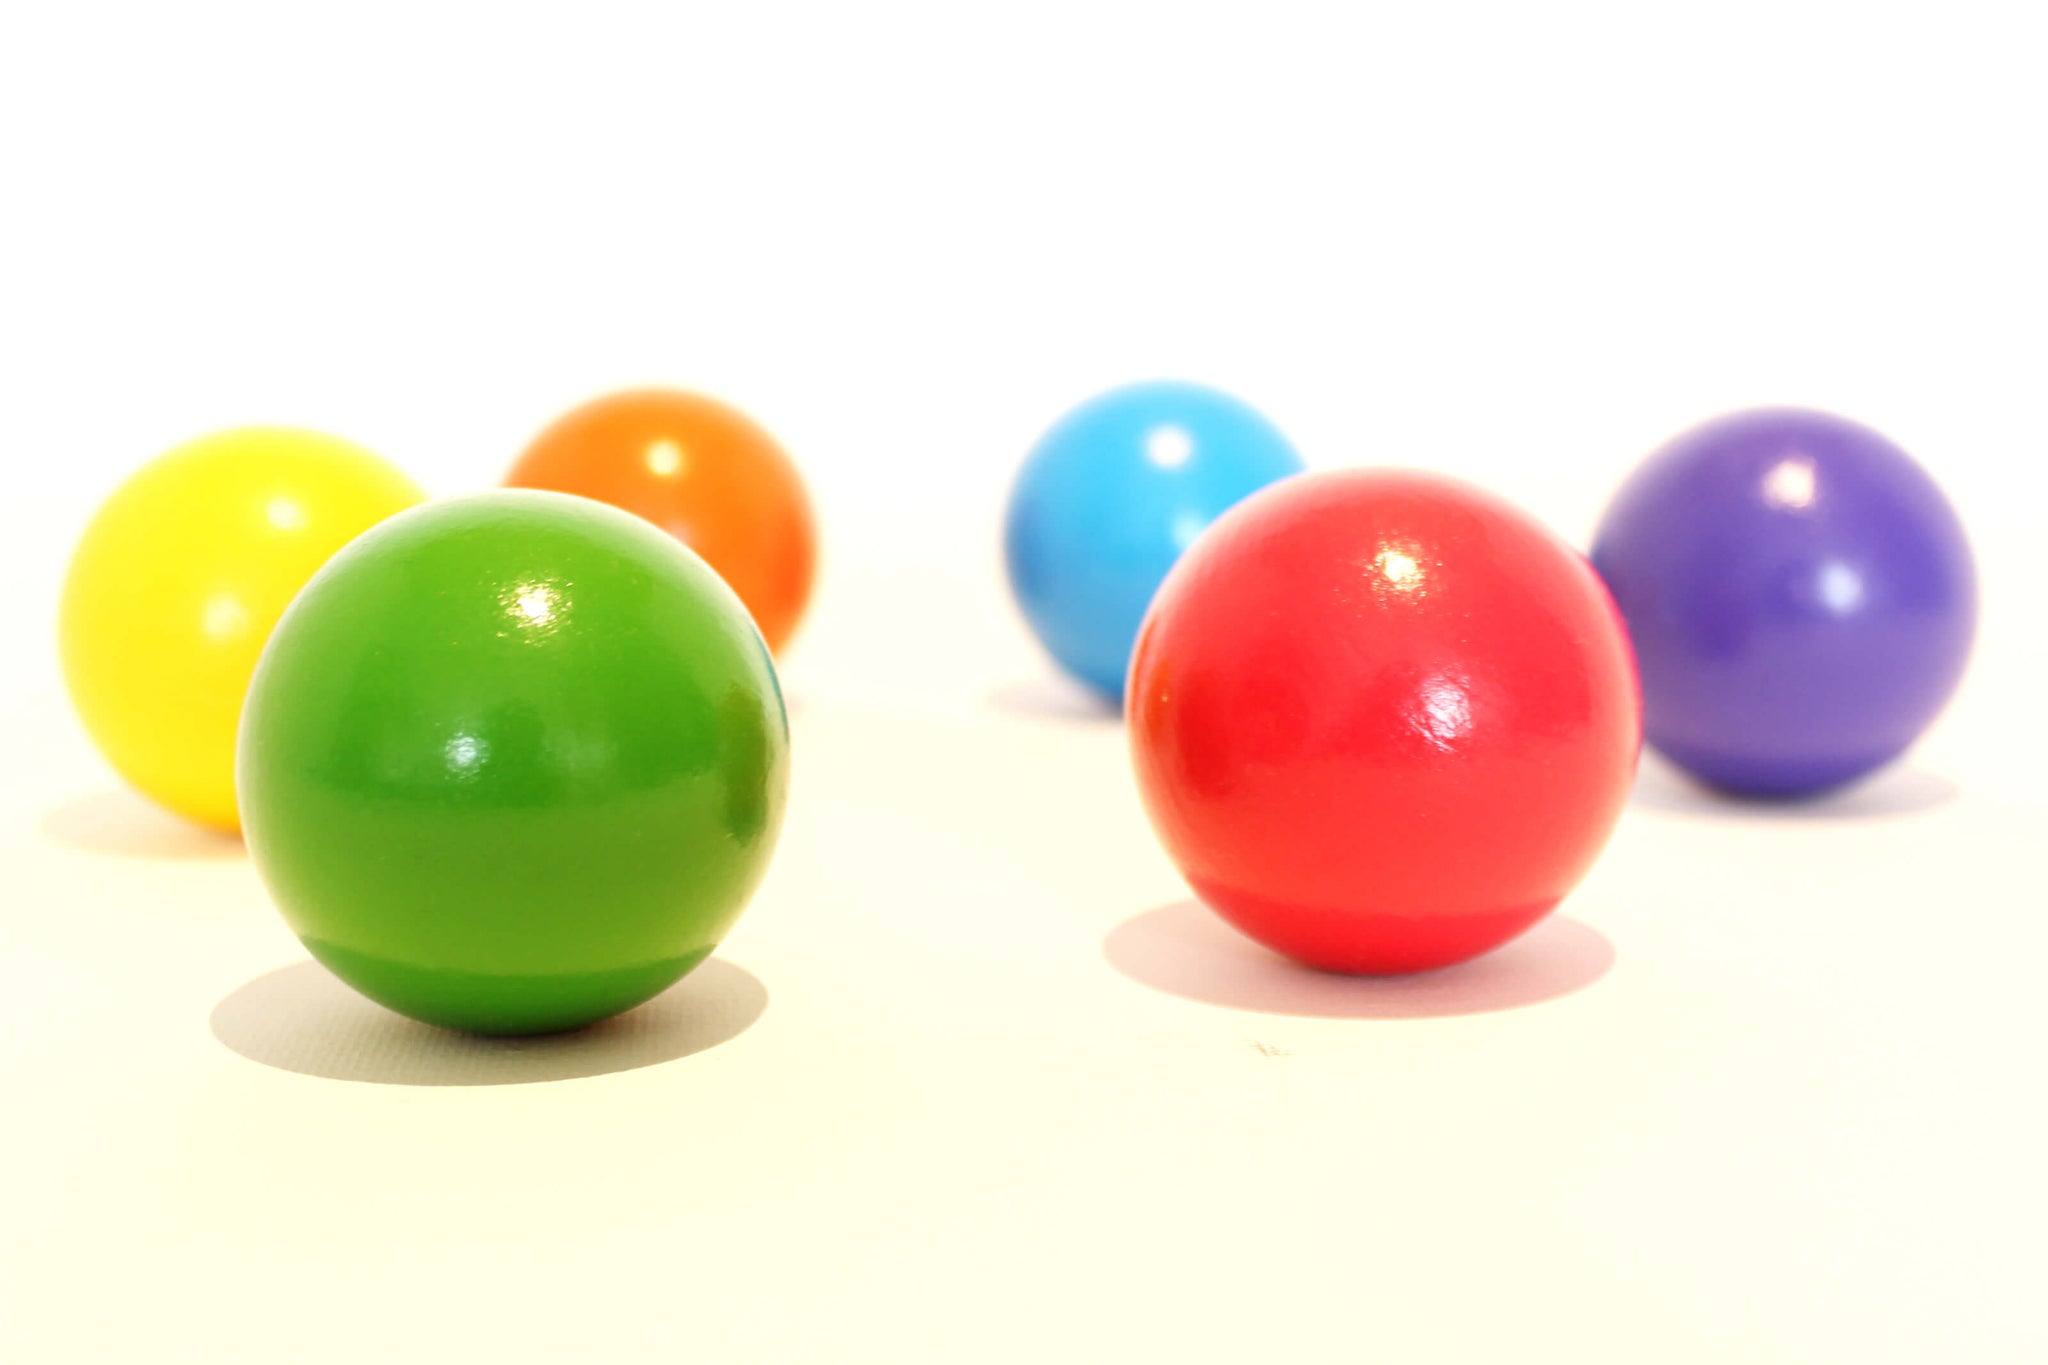 Wooden Rainbow balls, Wood N Toys